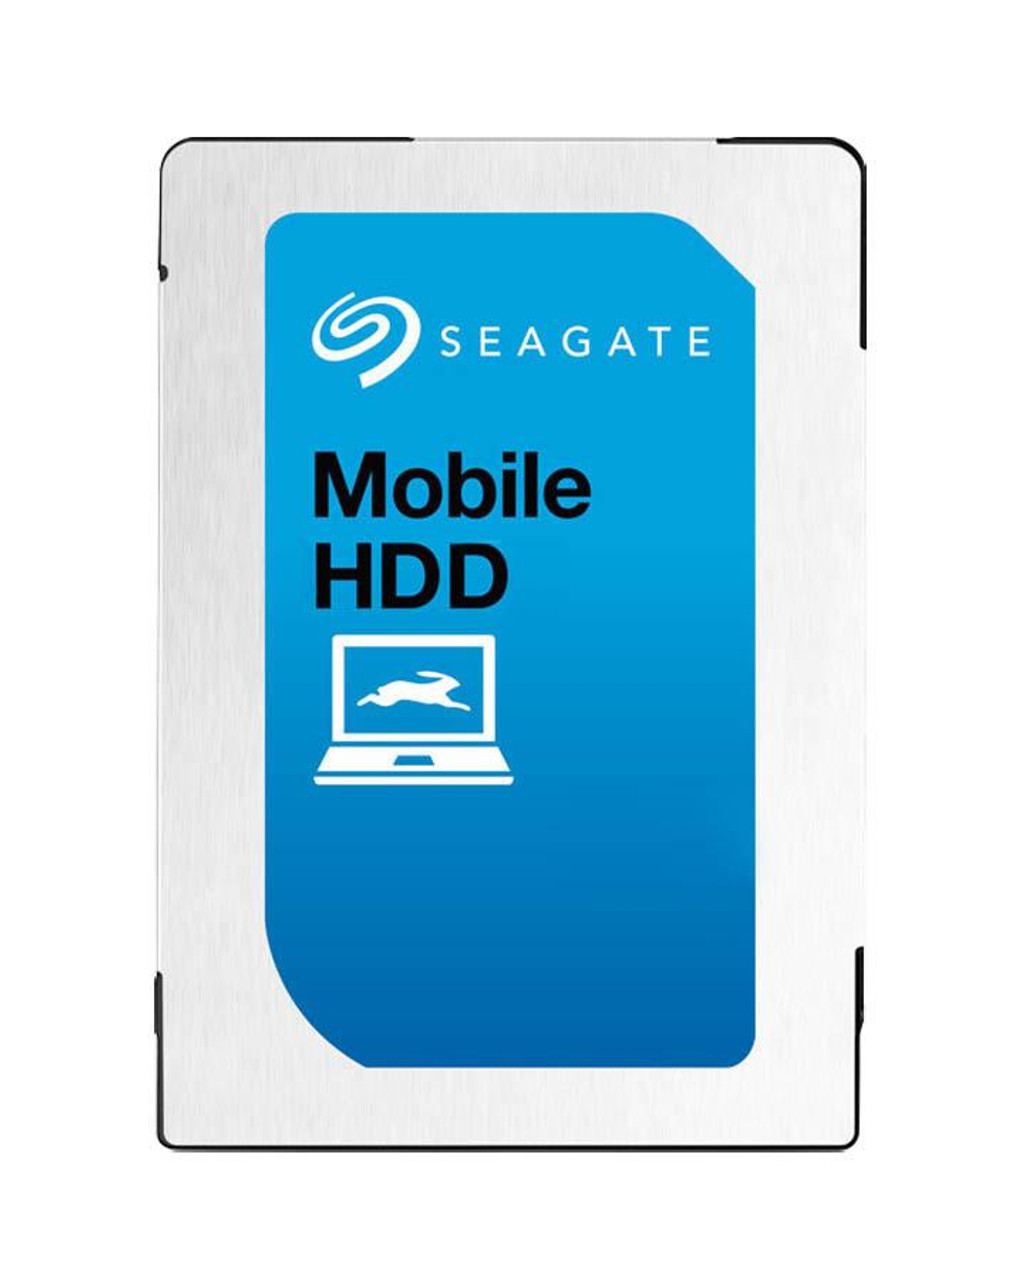 1RK172-987 Seagate Mobile HDD 1TB 5400RPM SATA 6Gbps 128MB Cache 2.5-inch Internal Hard Drive